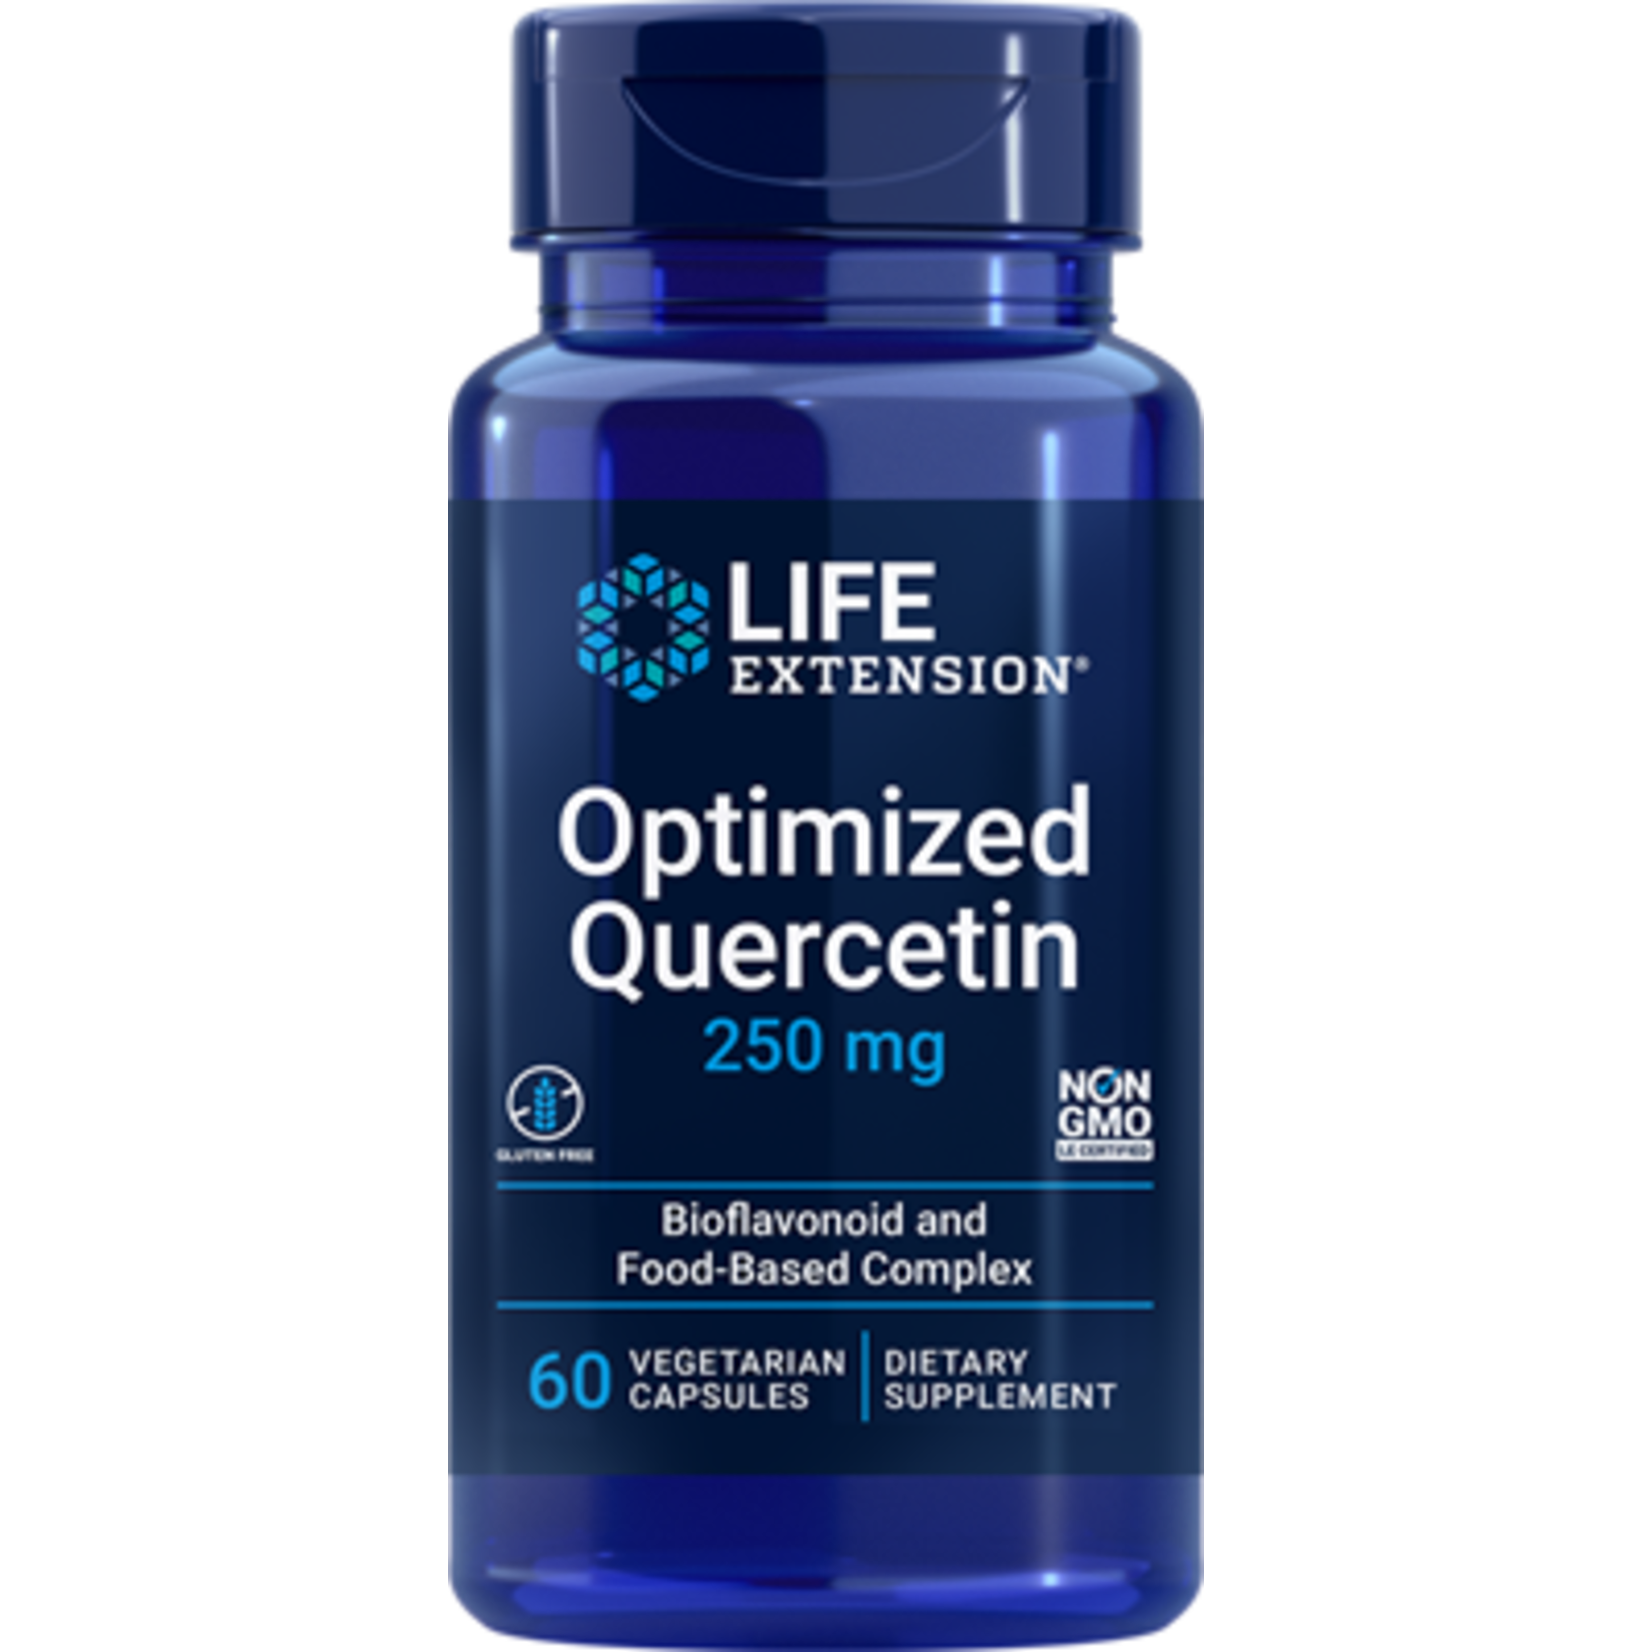 Life Extension Life Extension - Optimized Quercetin 250 mg - 60 Veg Capsules